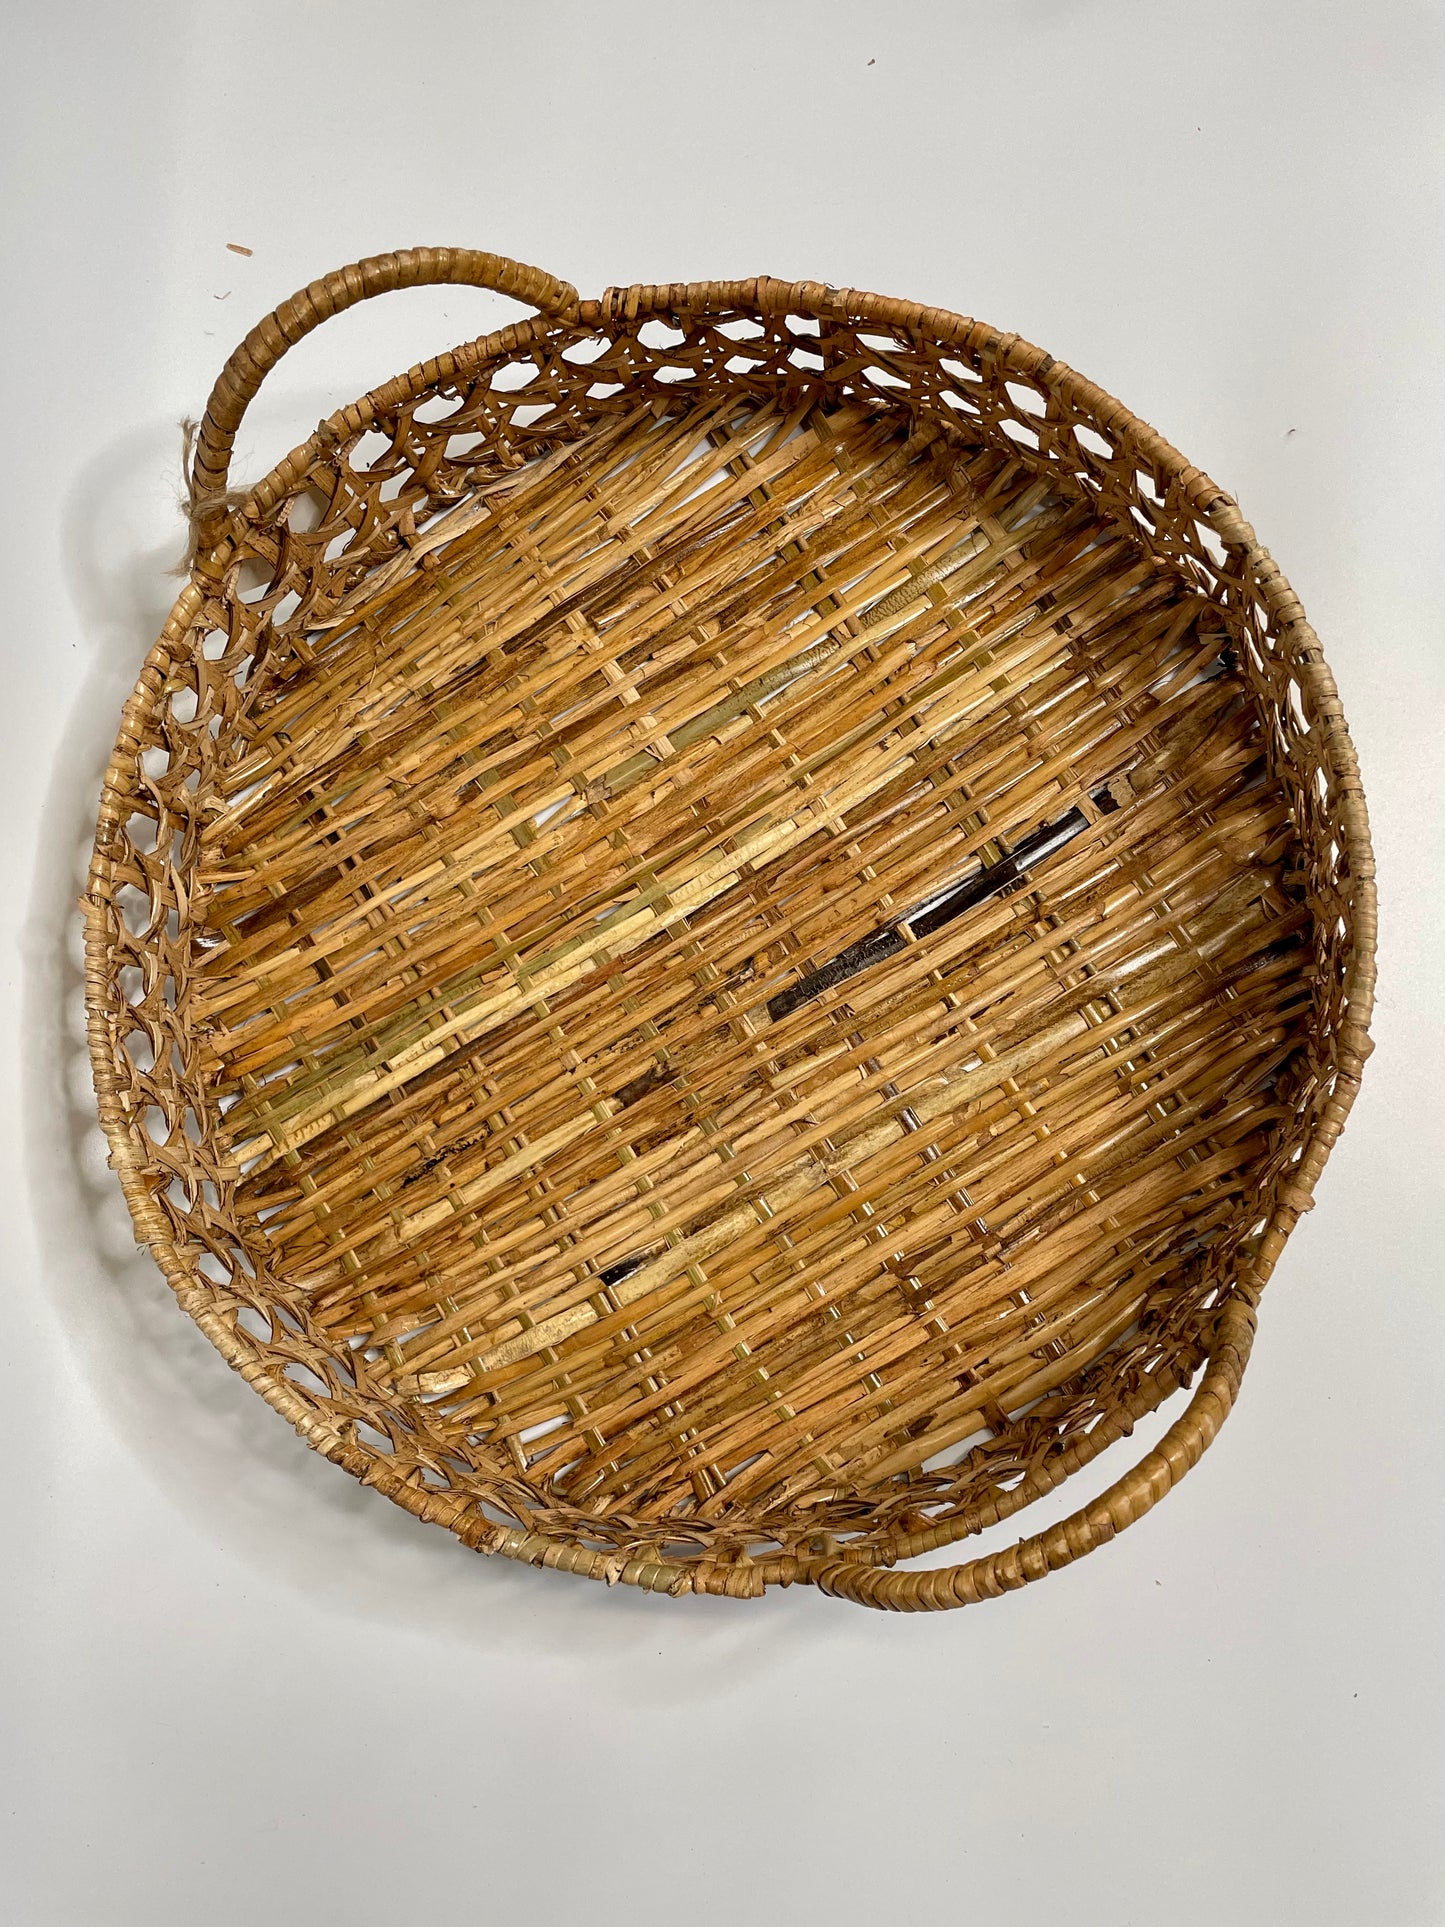 The Magnolia Basket